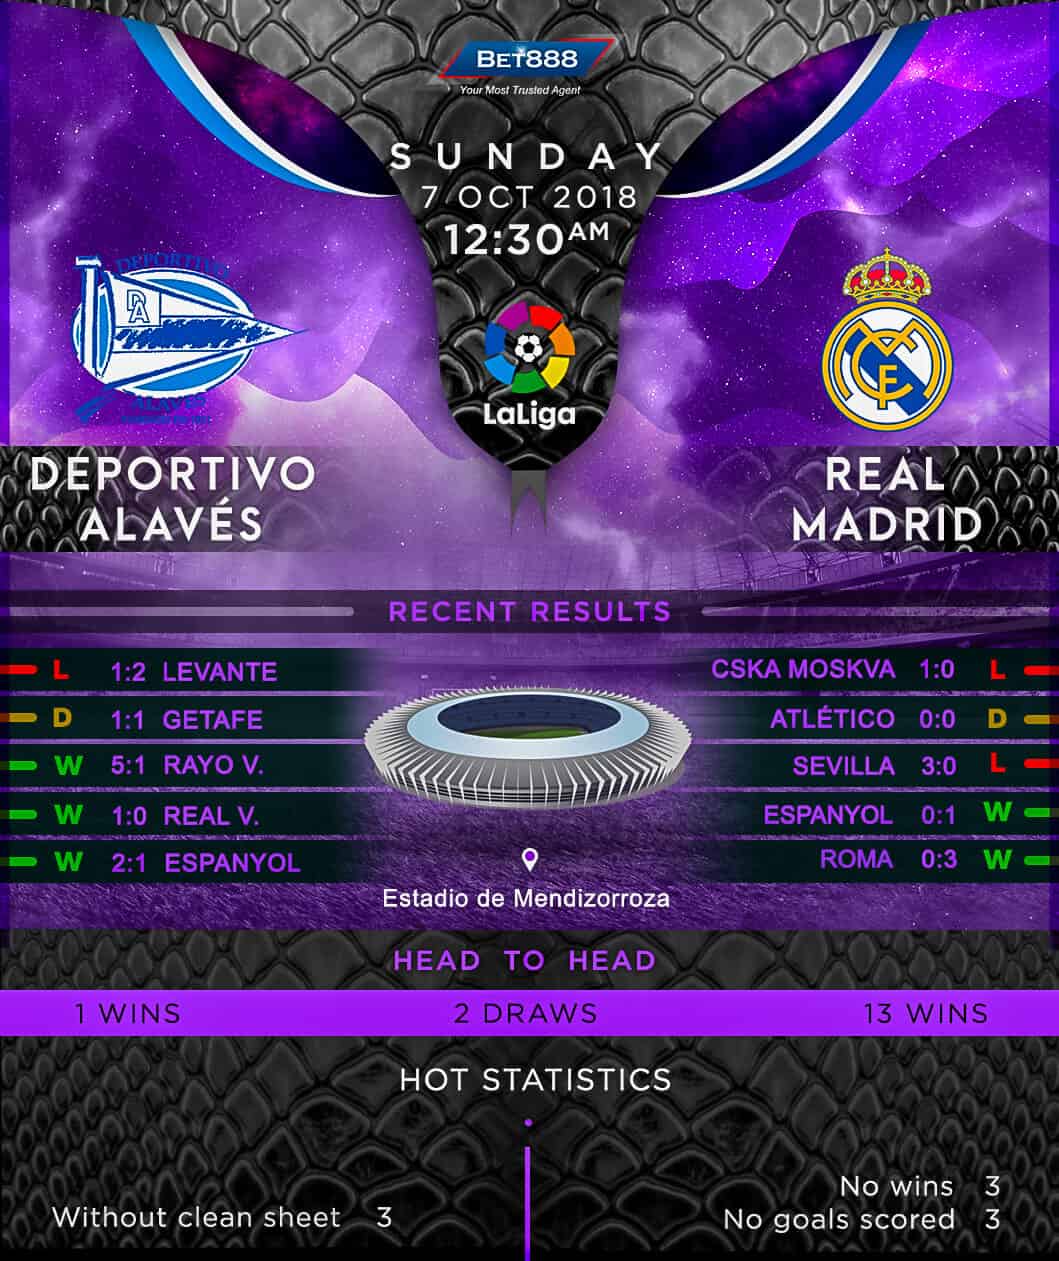 Deportivo Alaves vs Real Madrid 07/10/18